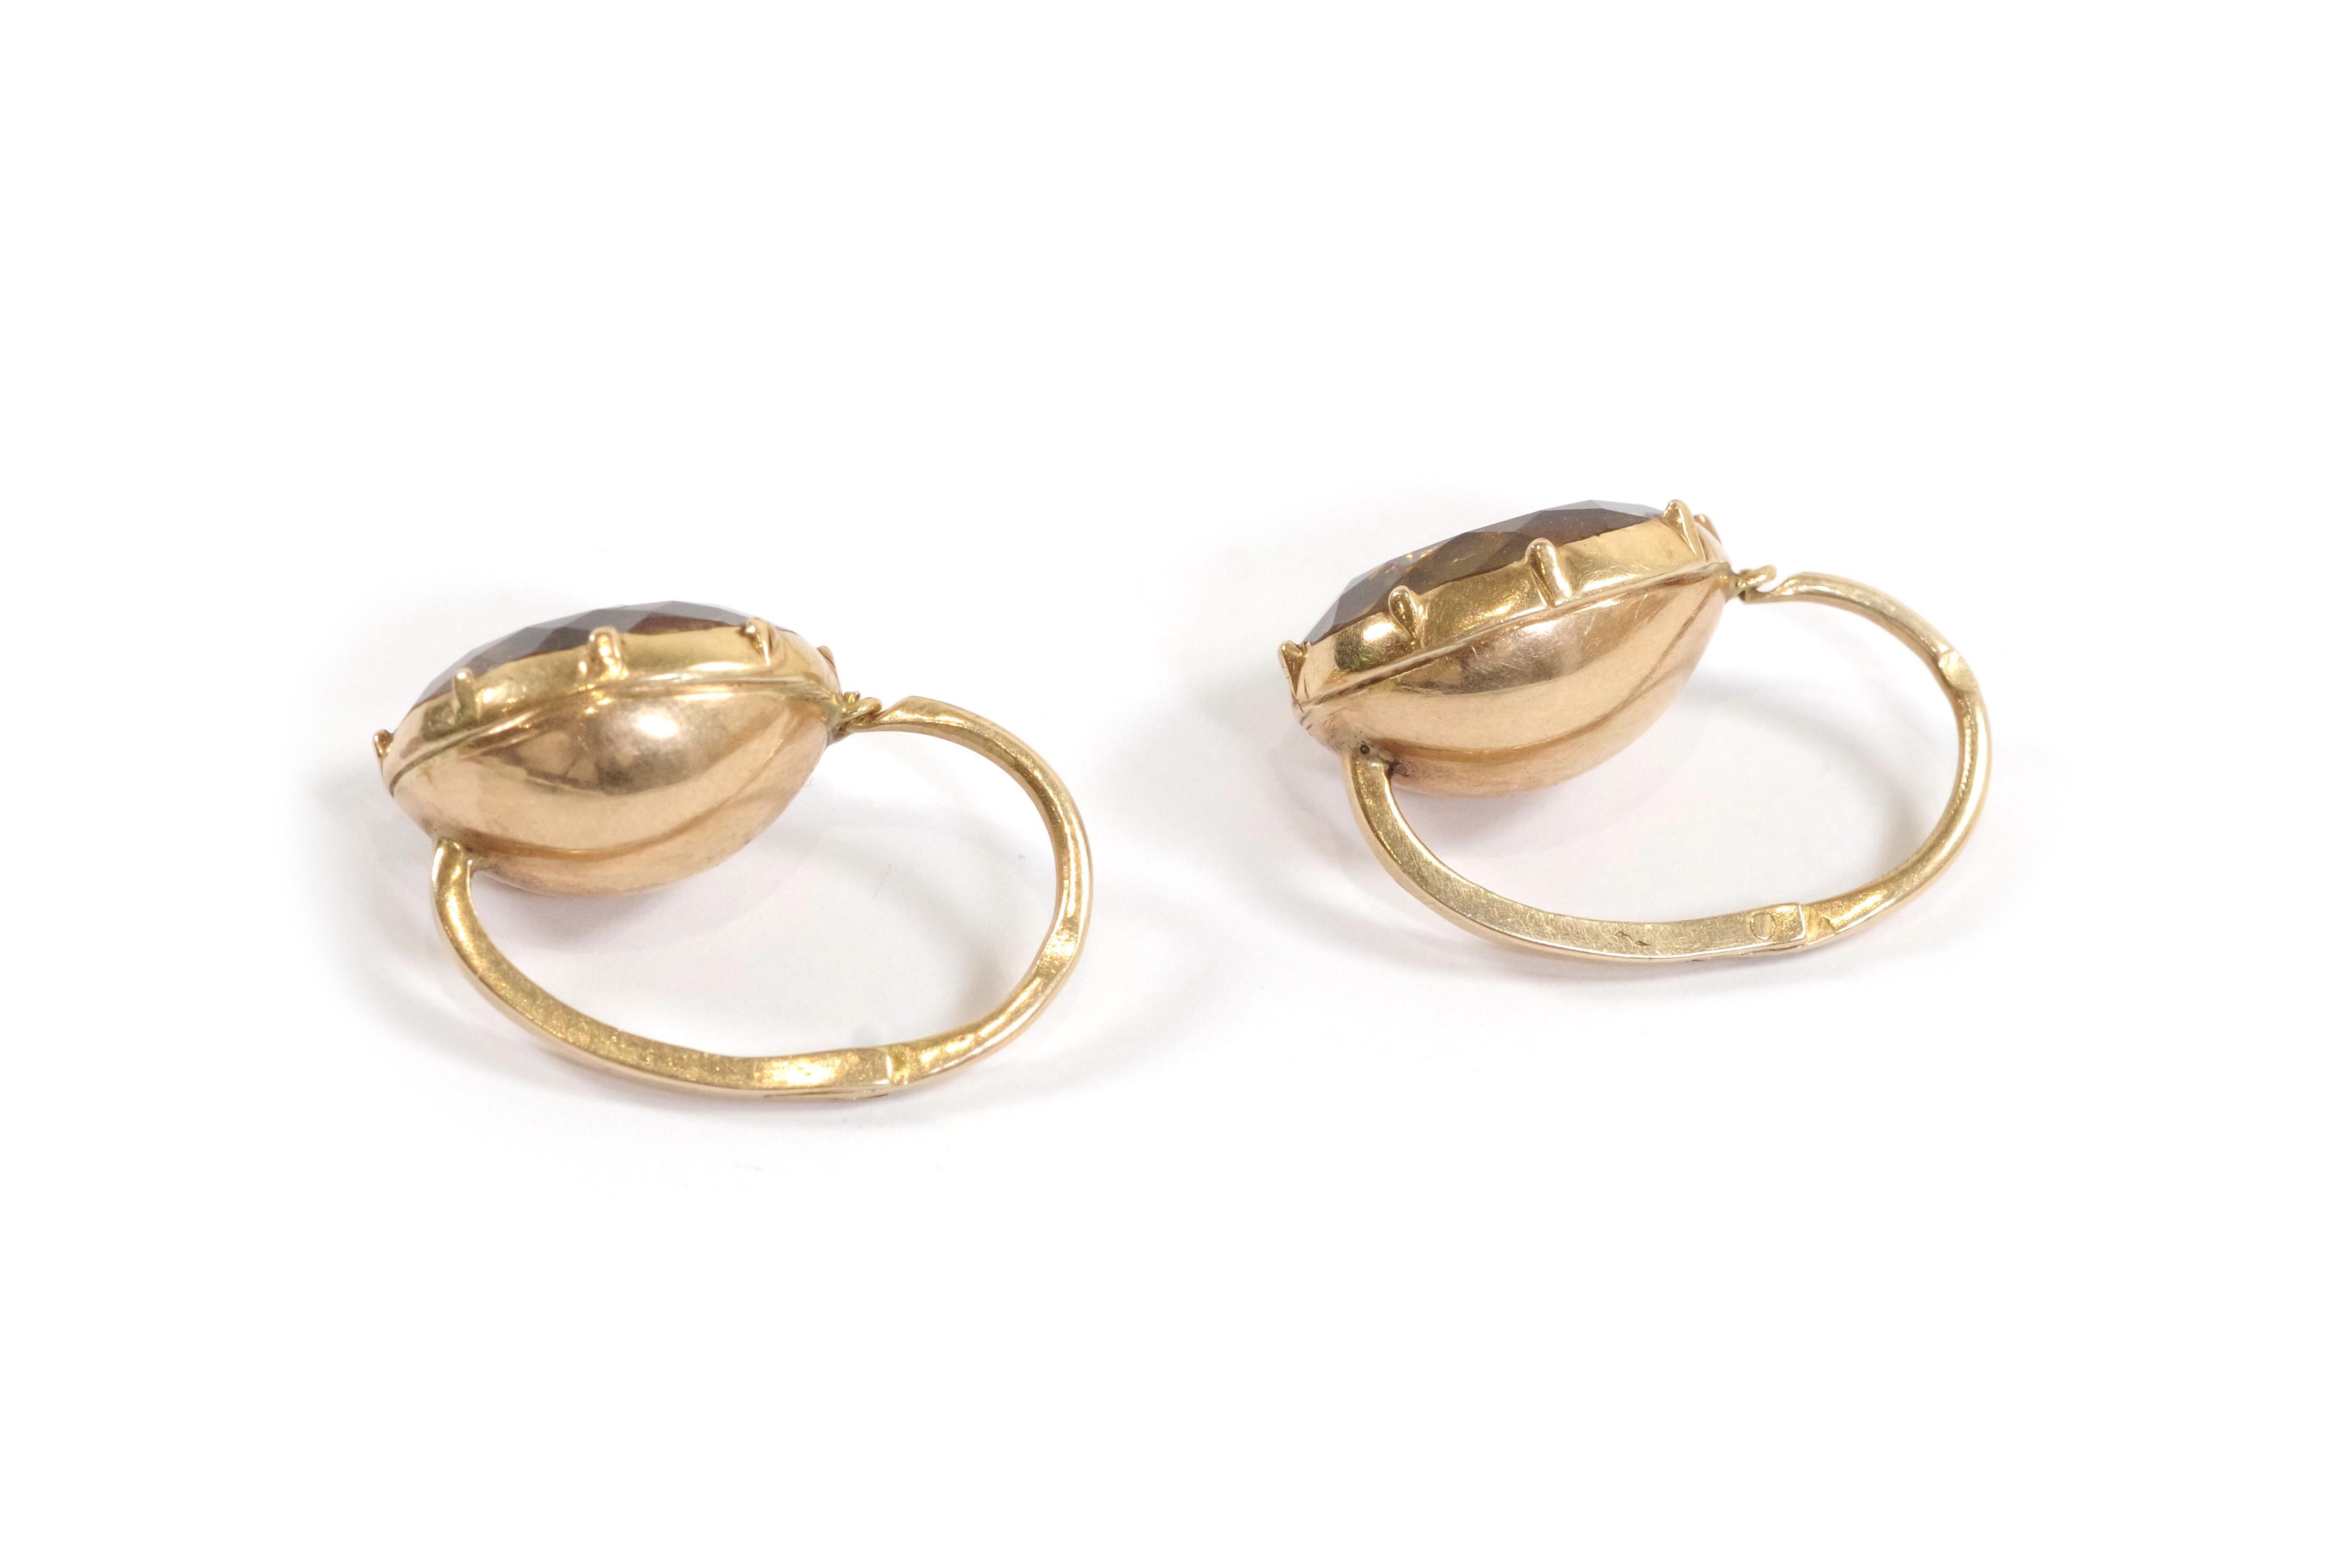 Oval Cut Georgian citrine earrings in 18k and 14 karat, antique foiled earrings For Sale